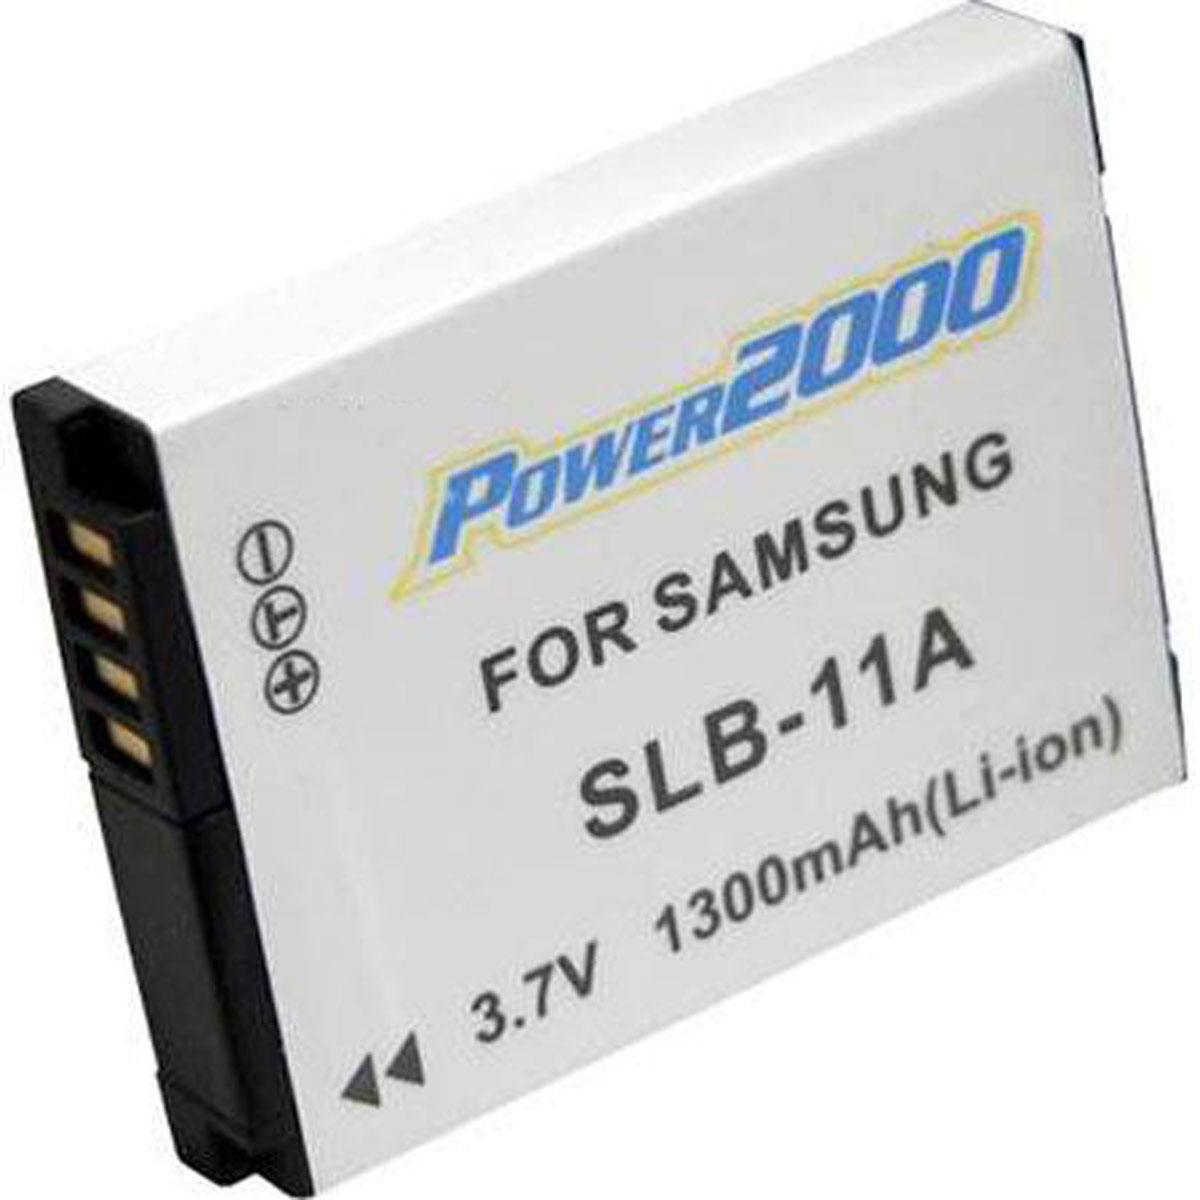 Power2000 SLB-11A 3,7 В 1300 мАч литий-ионный аккумулятор для камеры Samsung